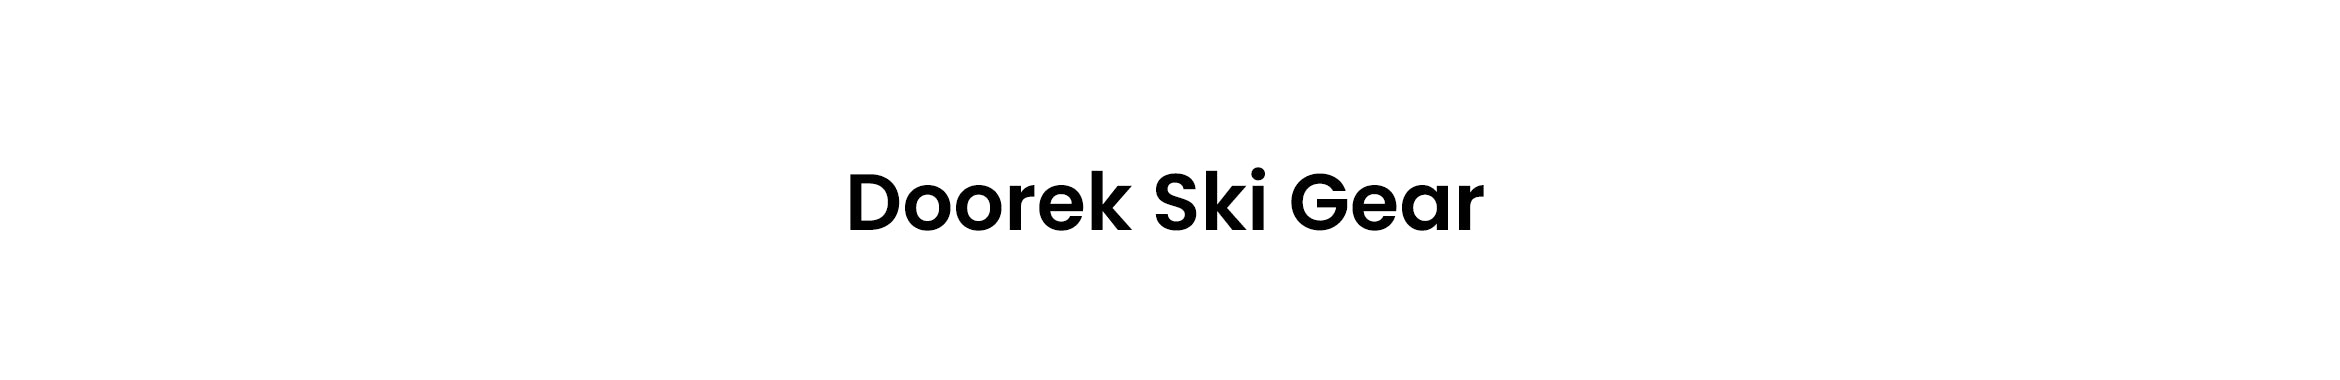 1. Doorek ski gear